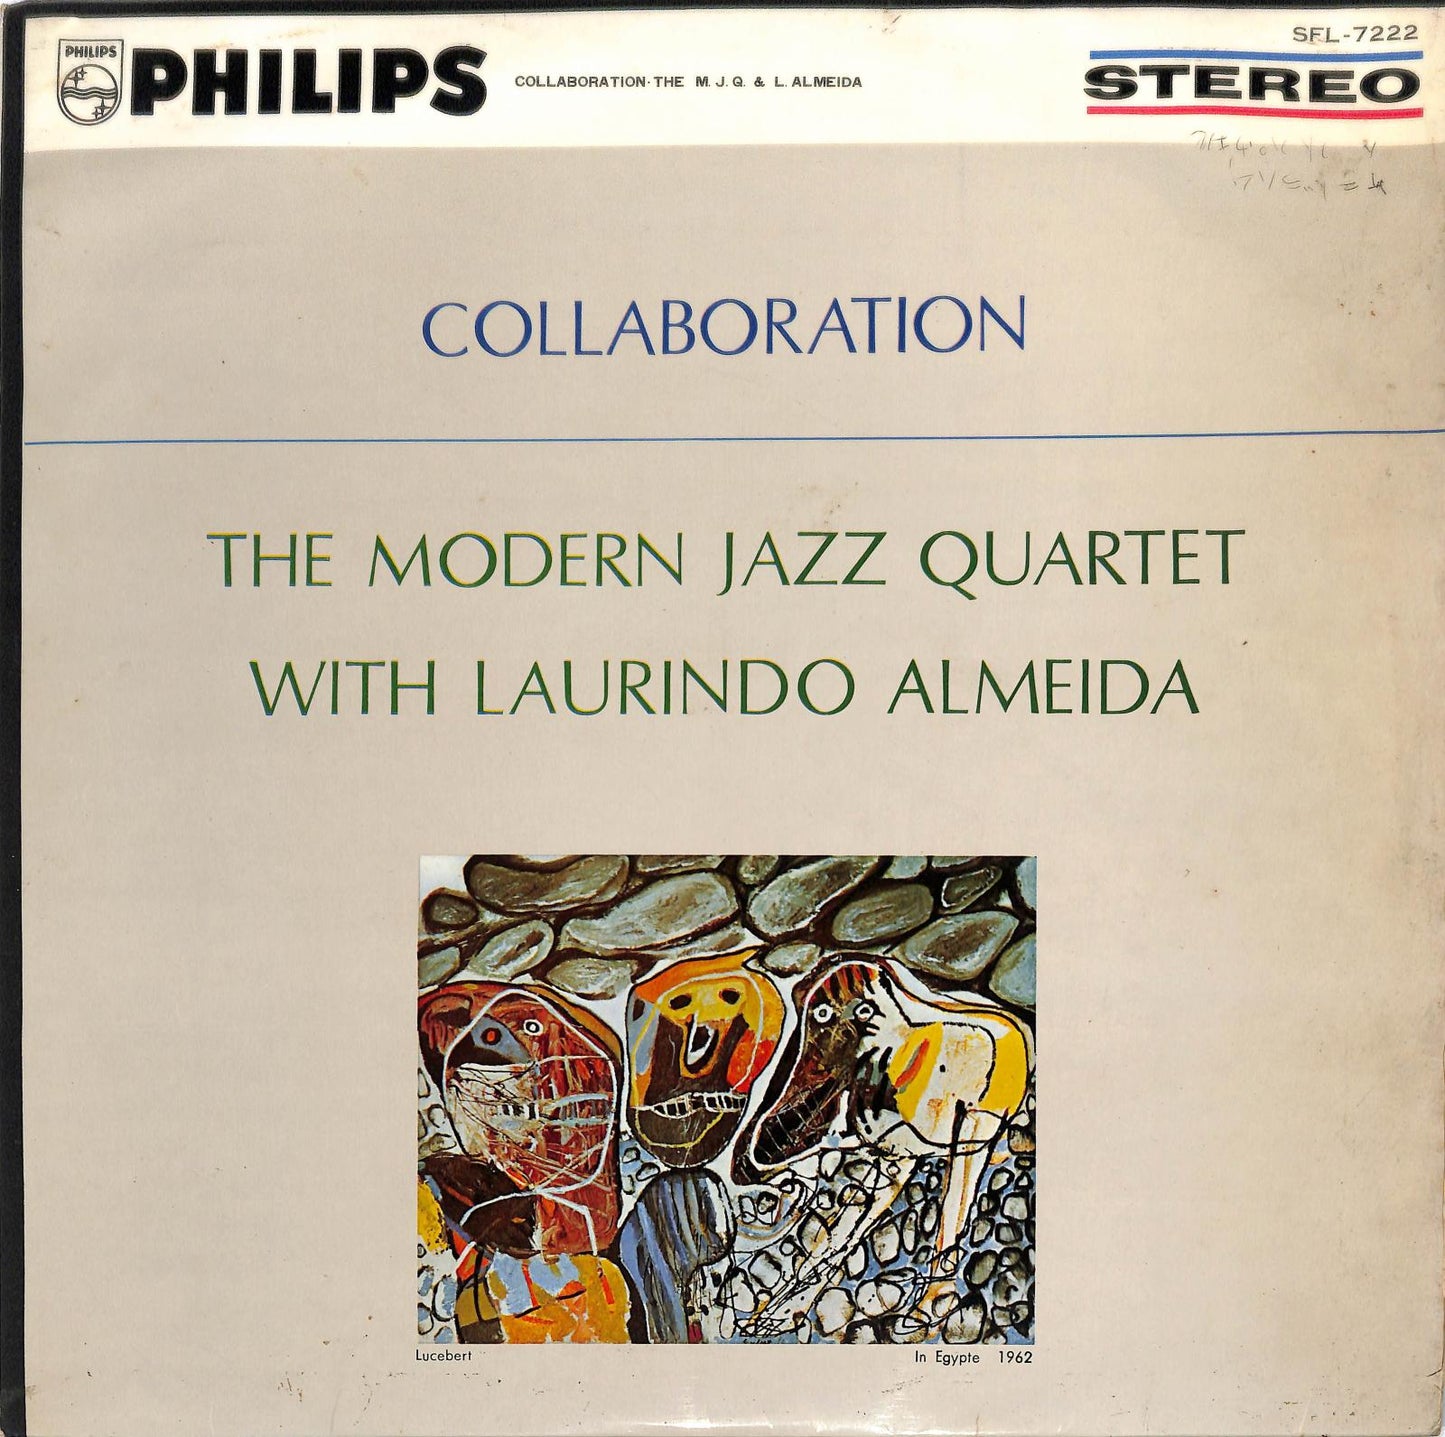 THE MODERN JAZZ QUARTET WITH LAURINDO ALMEIDA - Collaboration